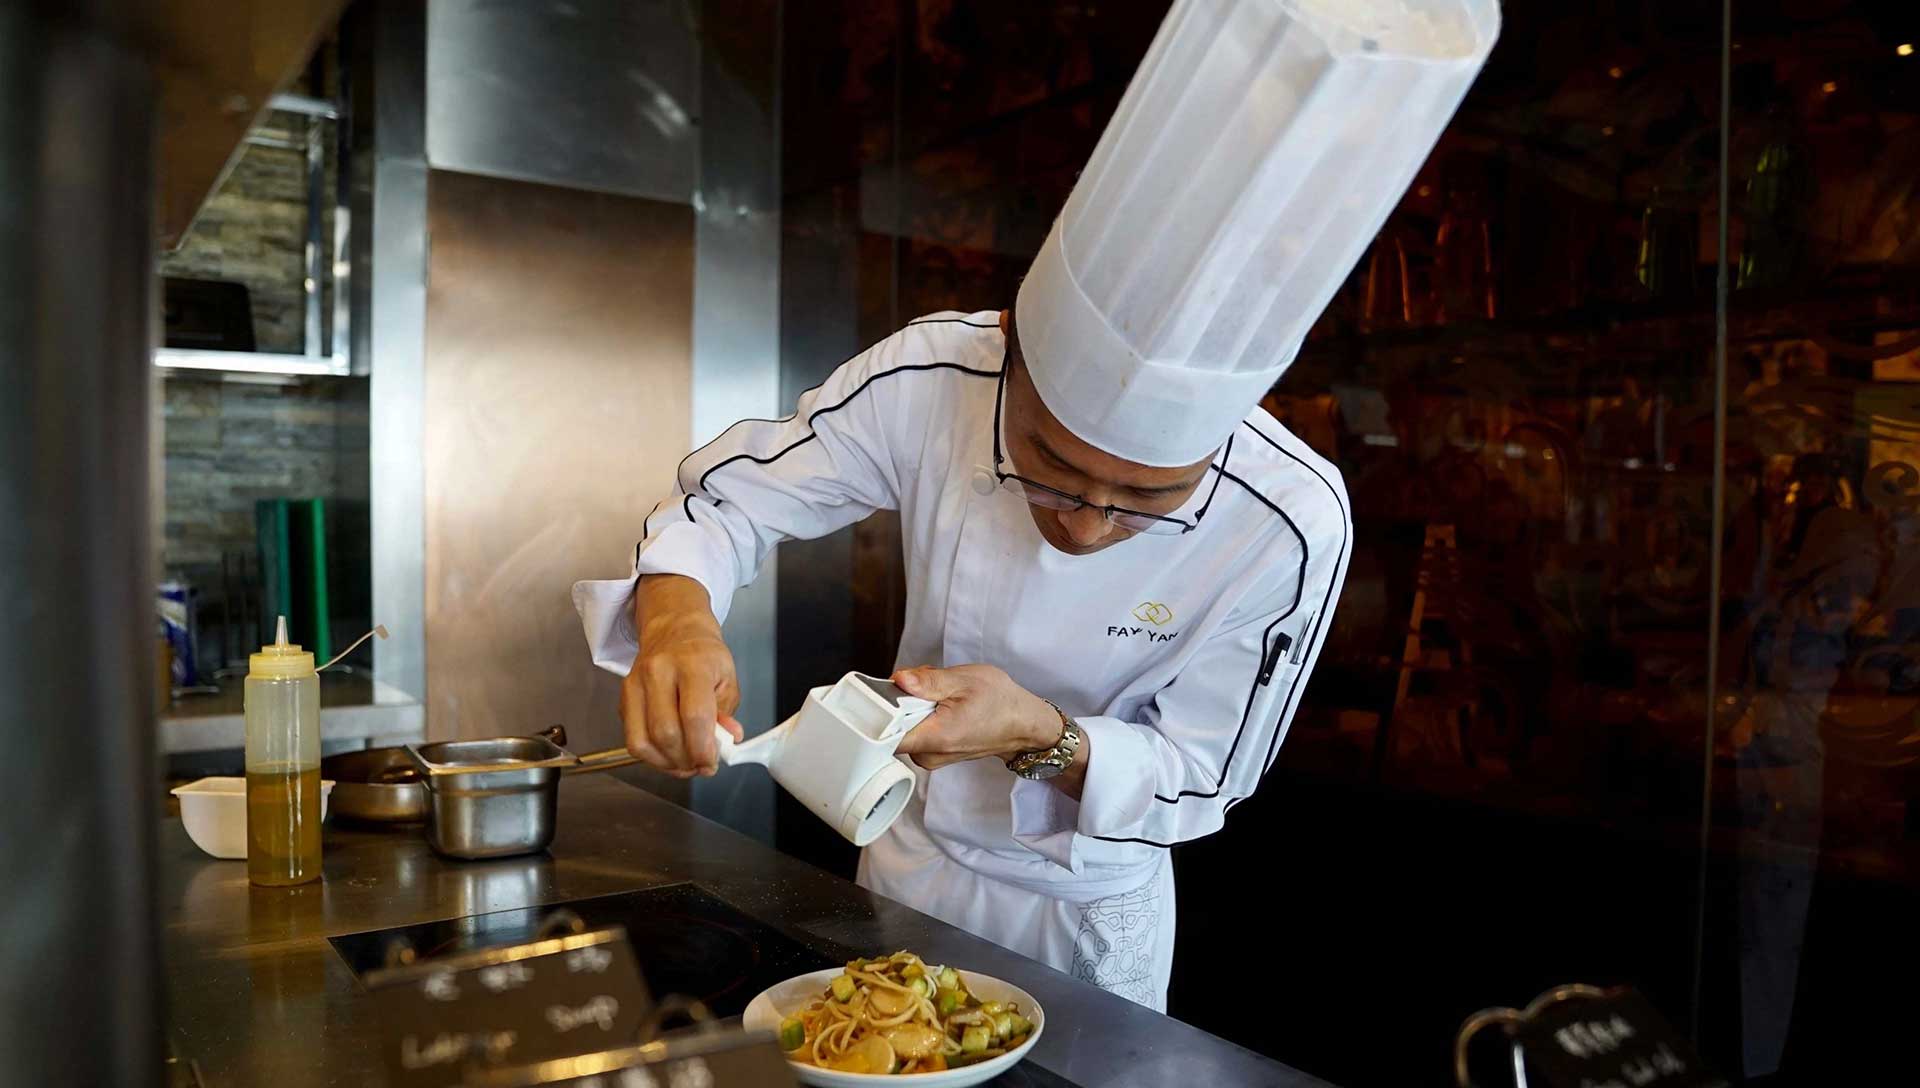 Chef Sofitel Kunming_case study page -410998-edited-1